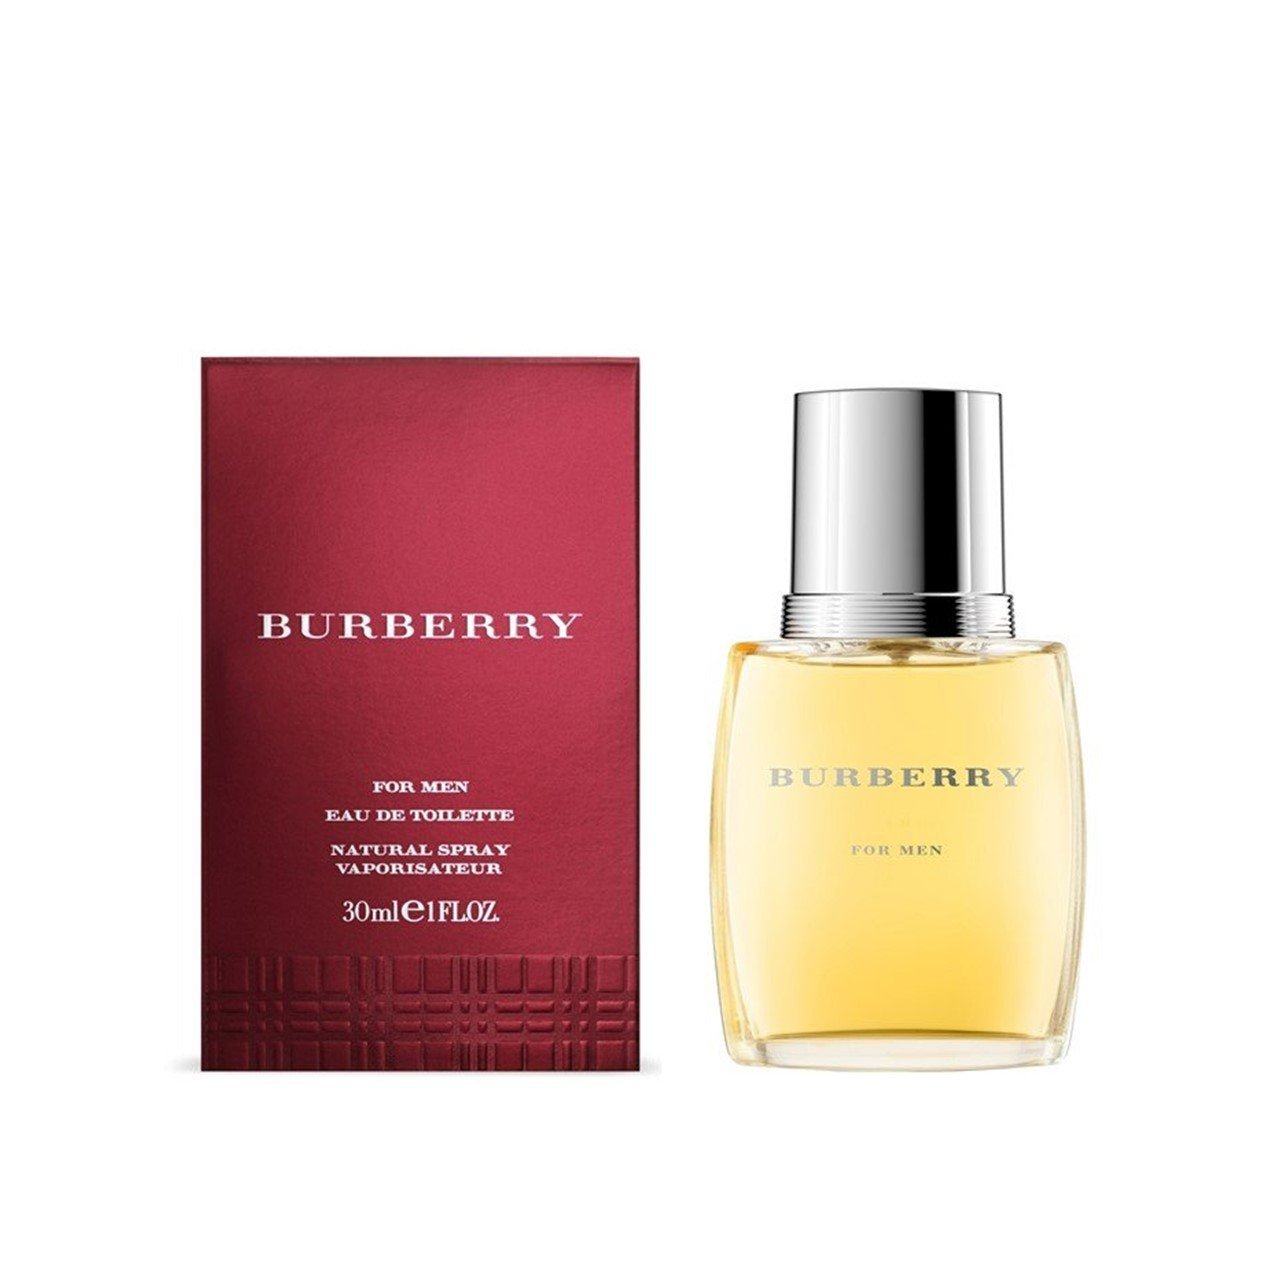 Burberry Classic EDT For Men | My Perfume Shop Australia